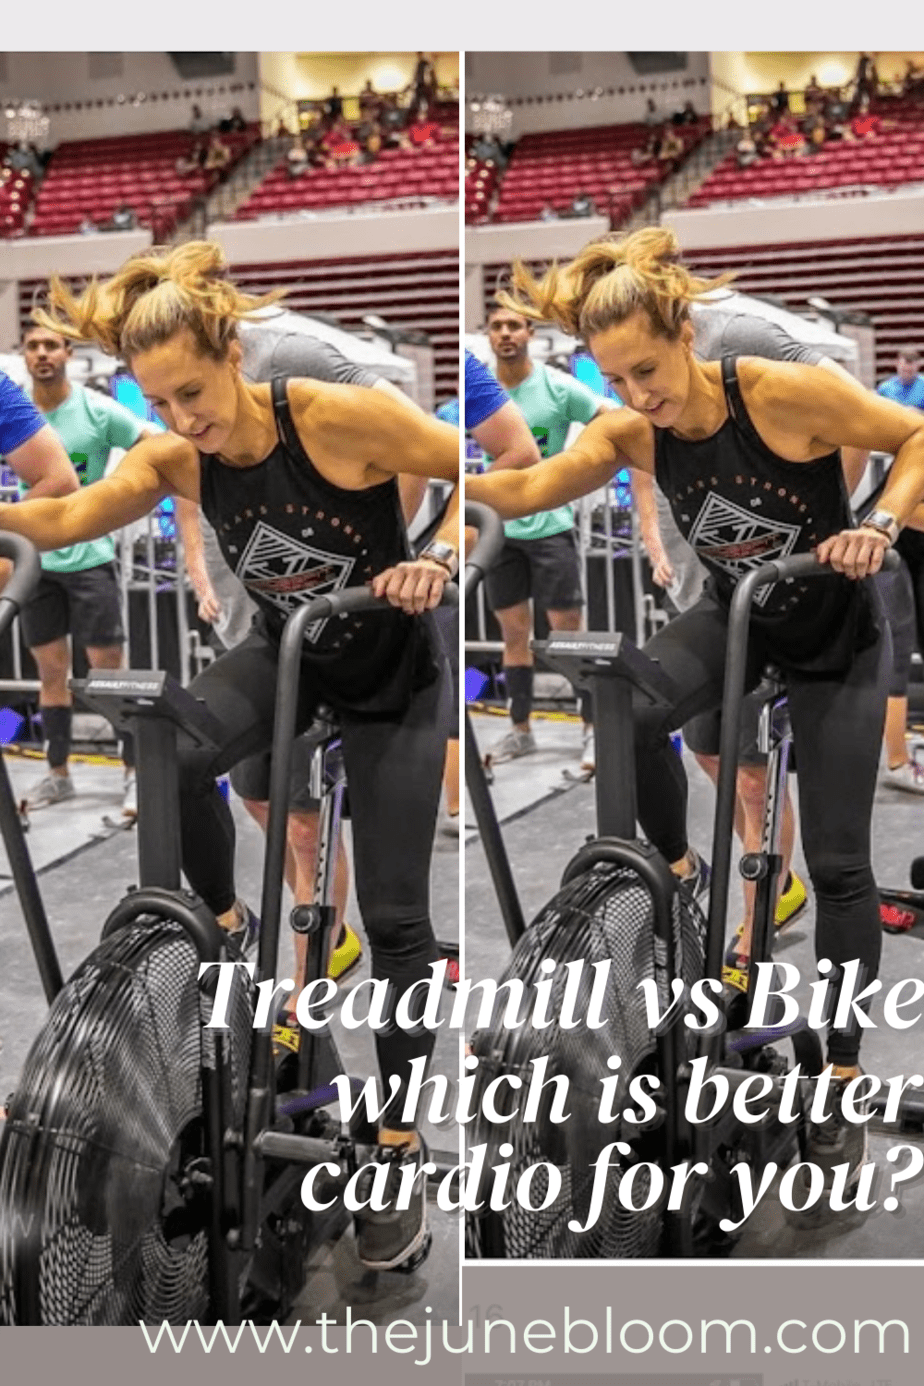 Treadmill vs Bike for weight loss